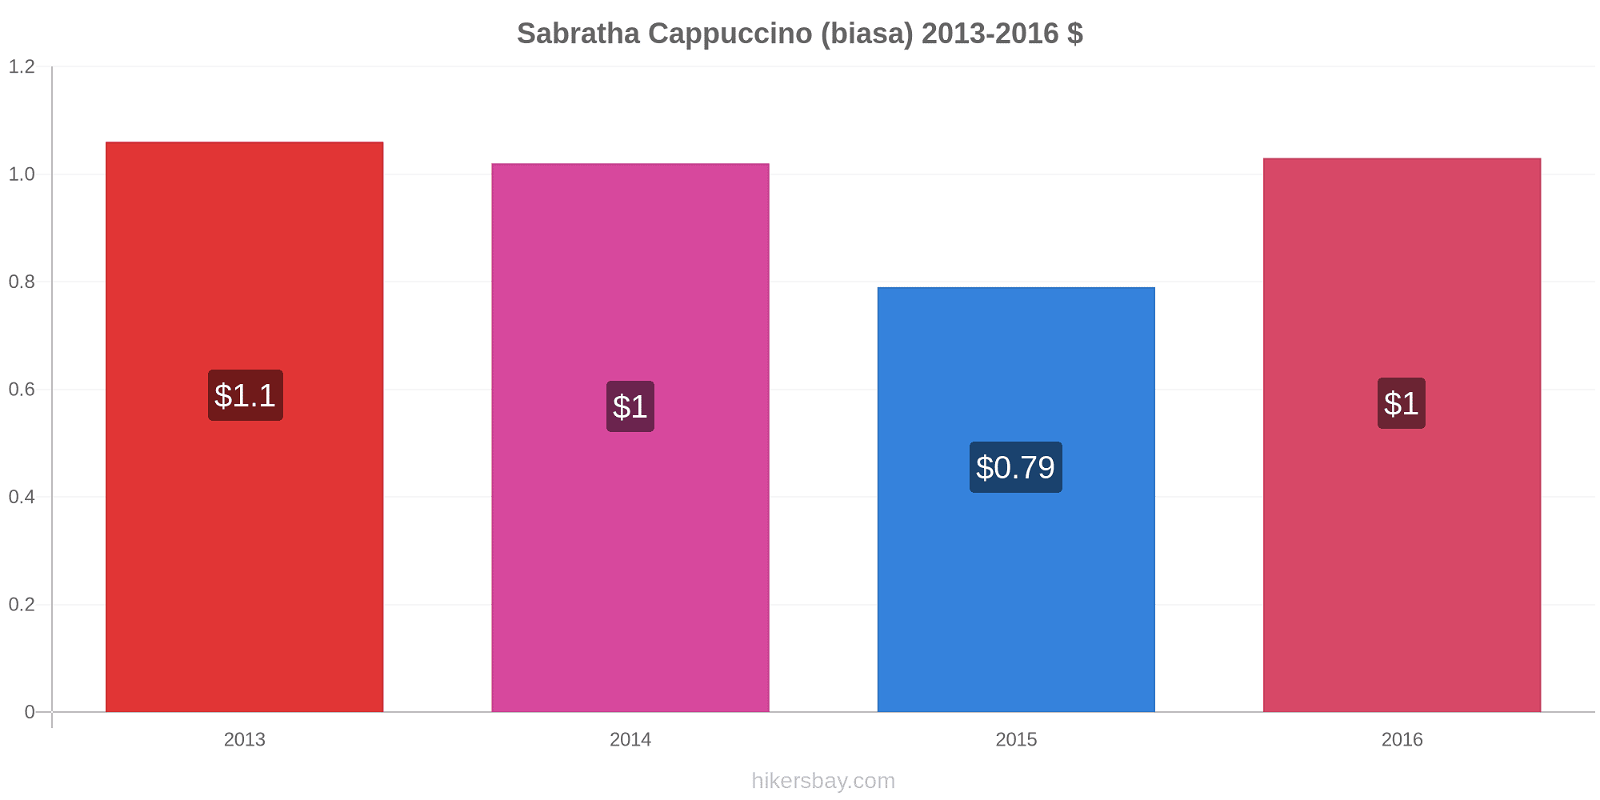 Sabratha perubahan harga Cappuccino (biasa) hikersbay.com